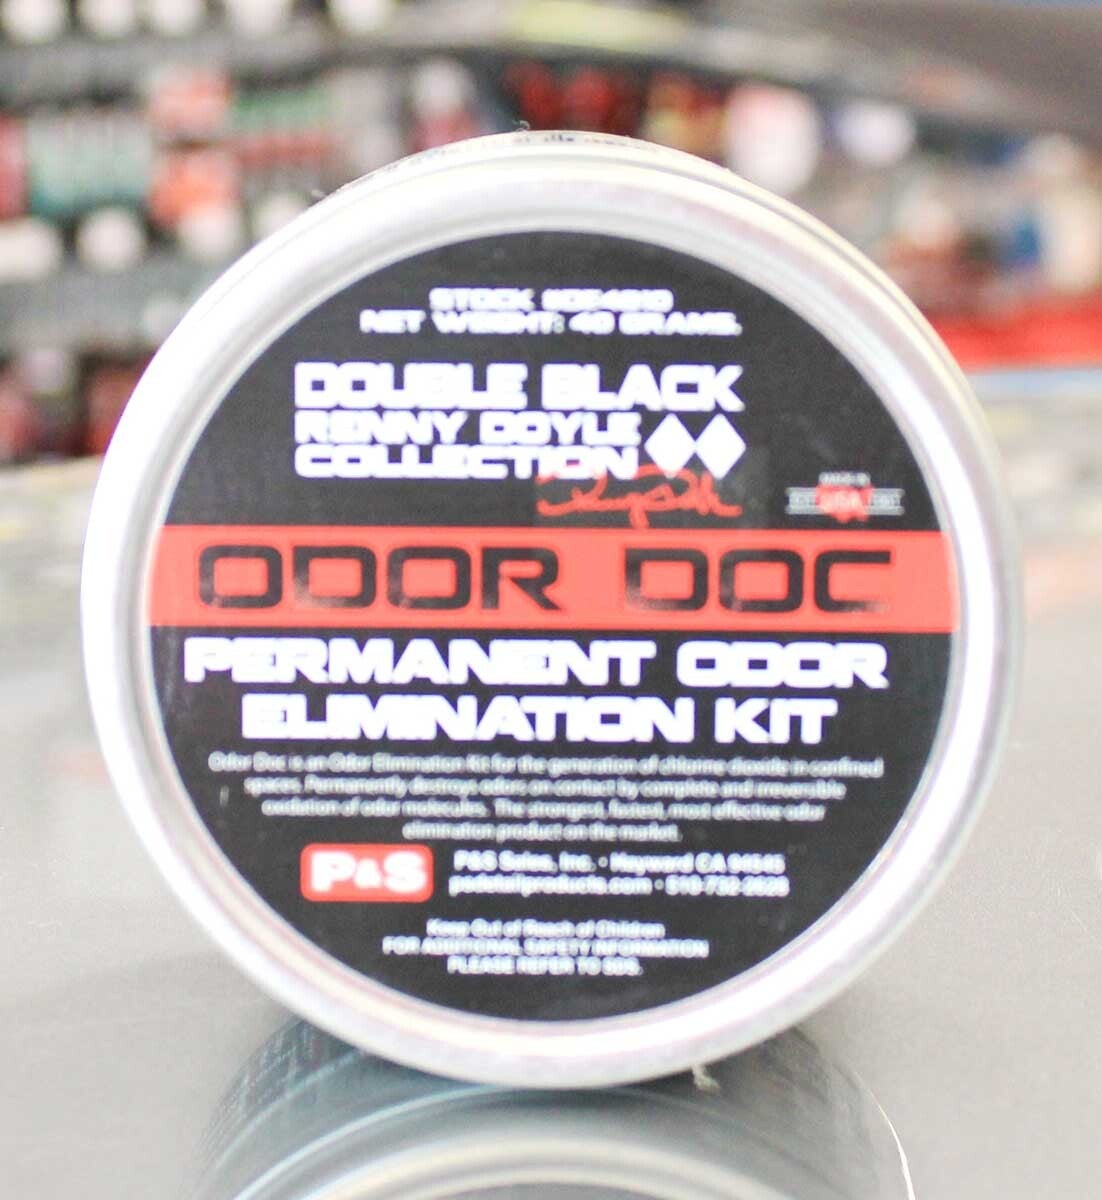 P&S Odor Elimination Kit